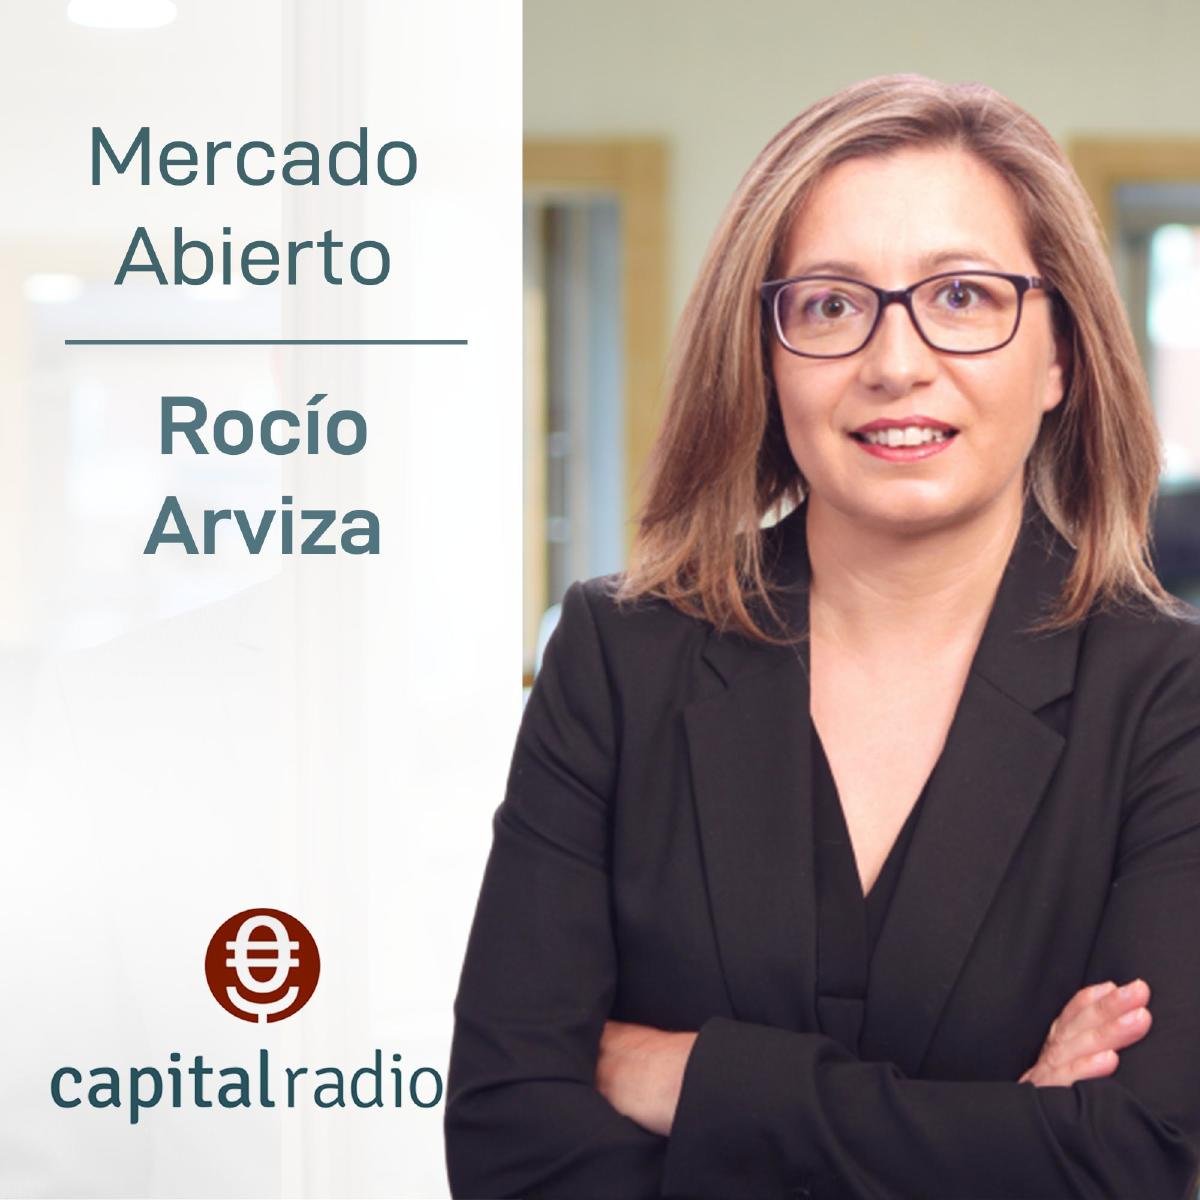 www.capitalradio.es